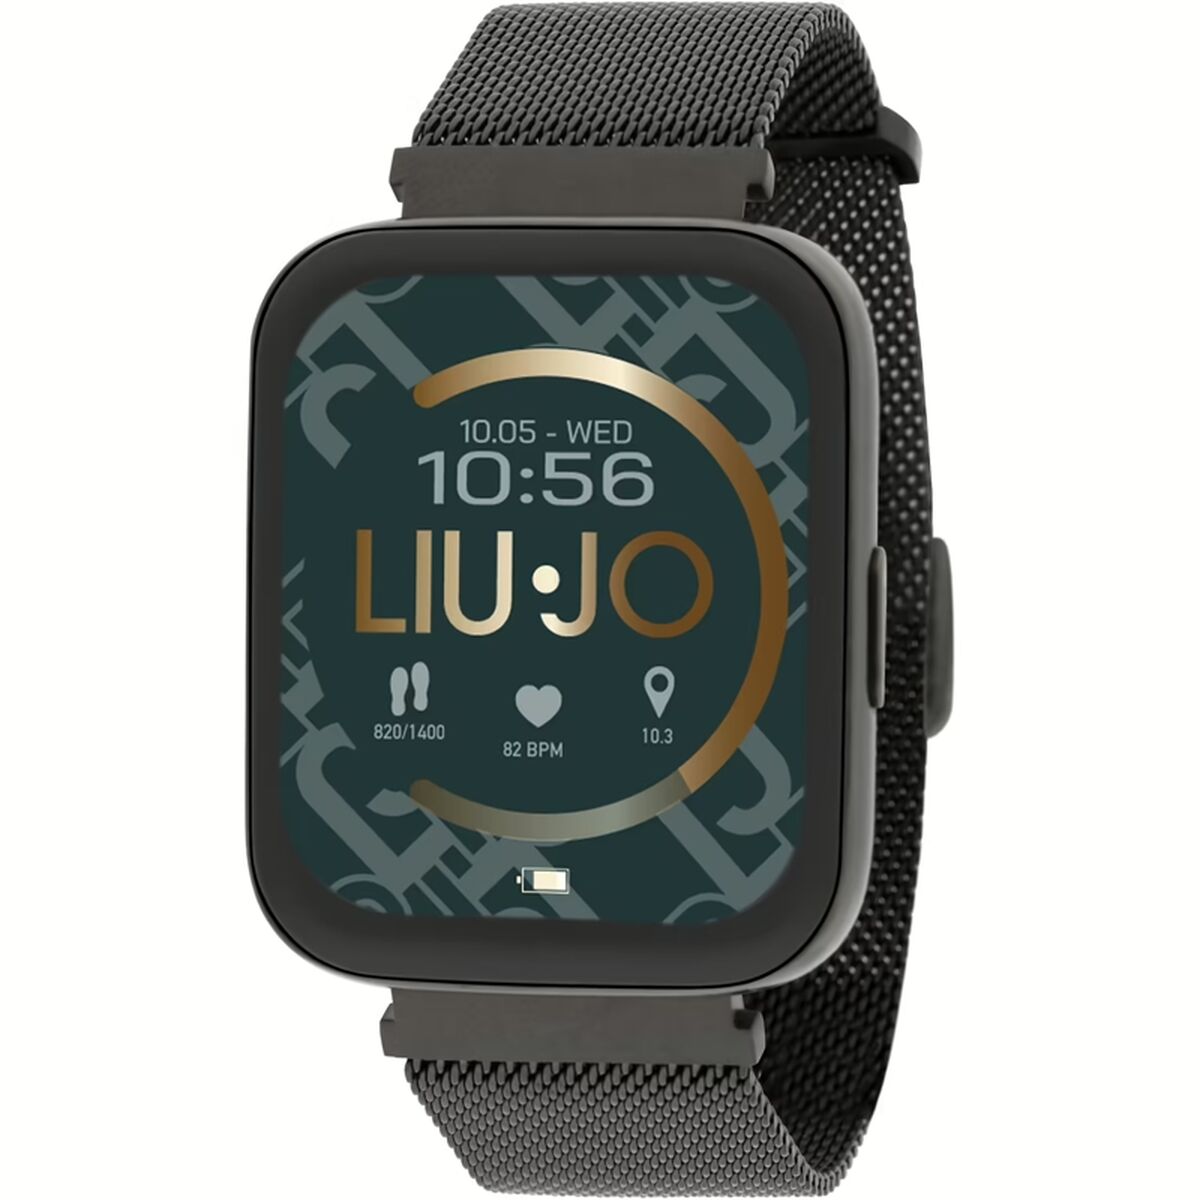 Kaufe Smartwatch LIU JO SWLJ082 bei AWK Flagship um € 180.00